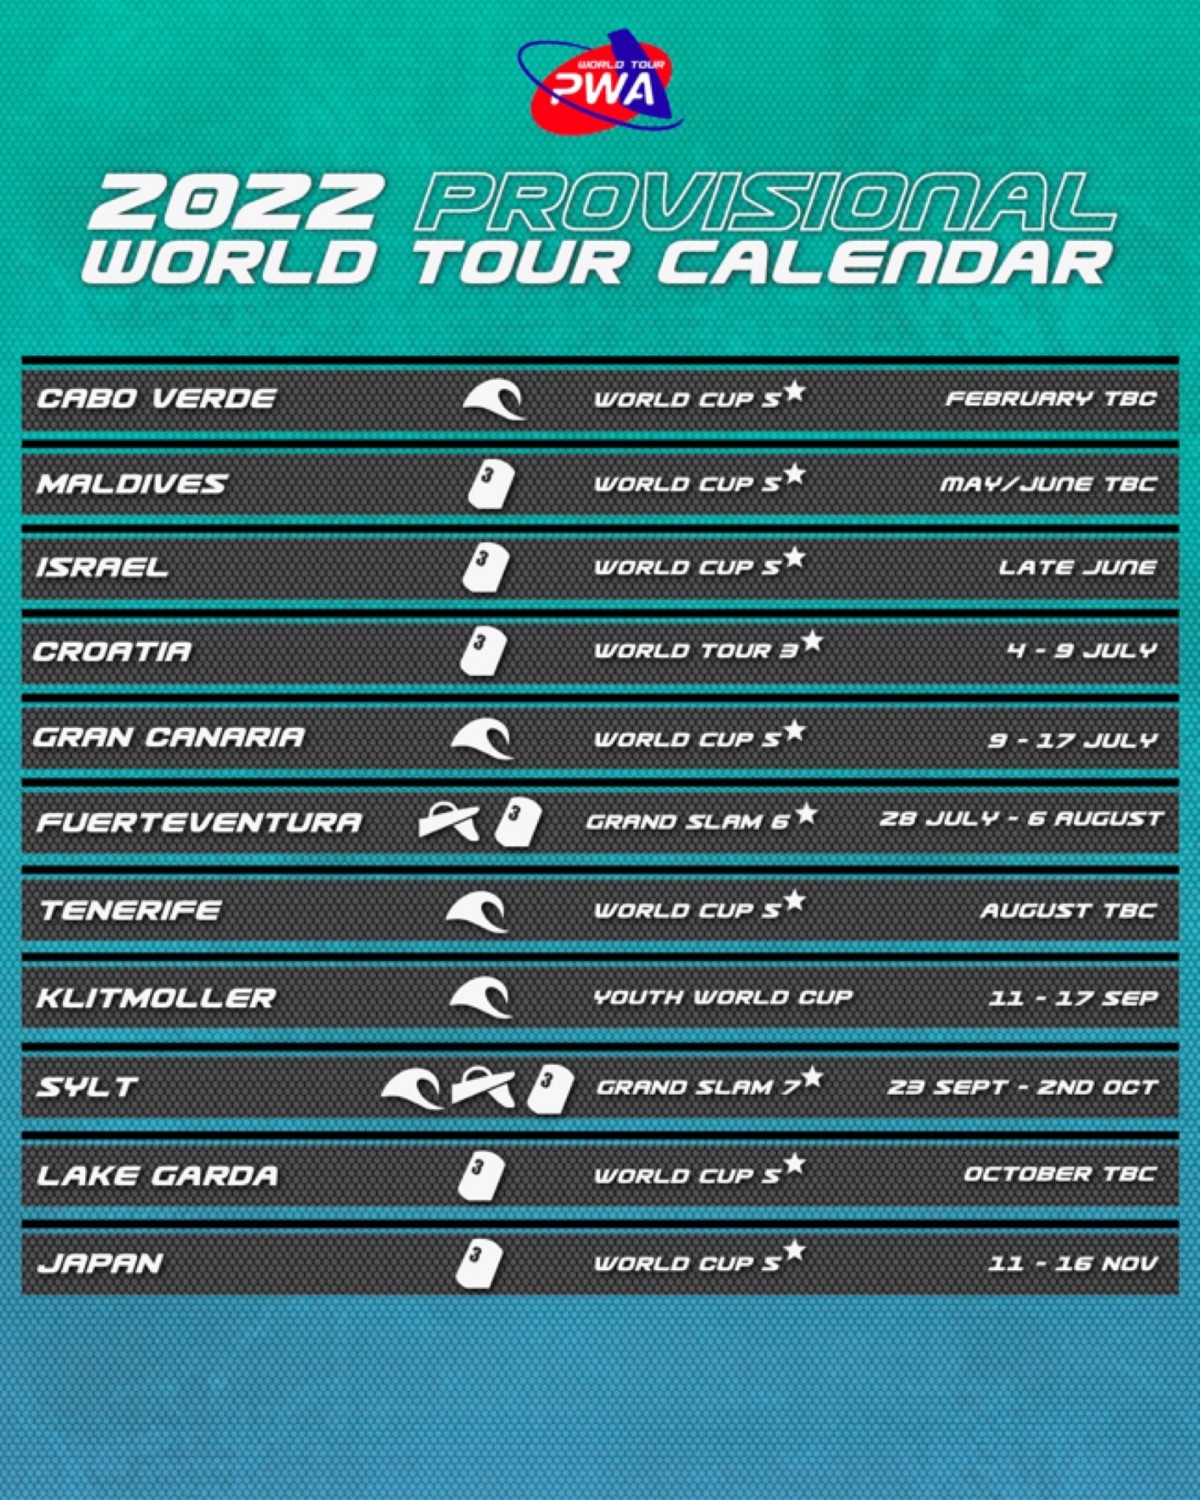 PWA World Tour calendar 2022